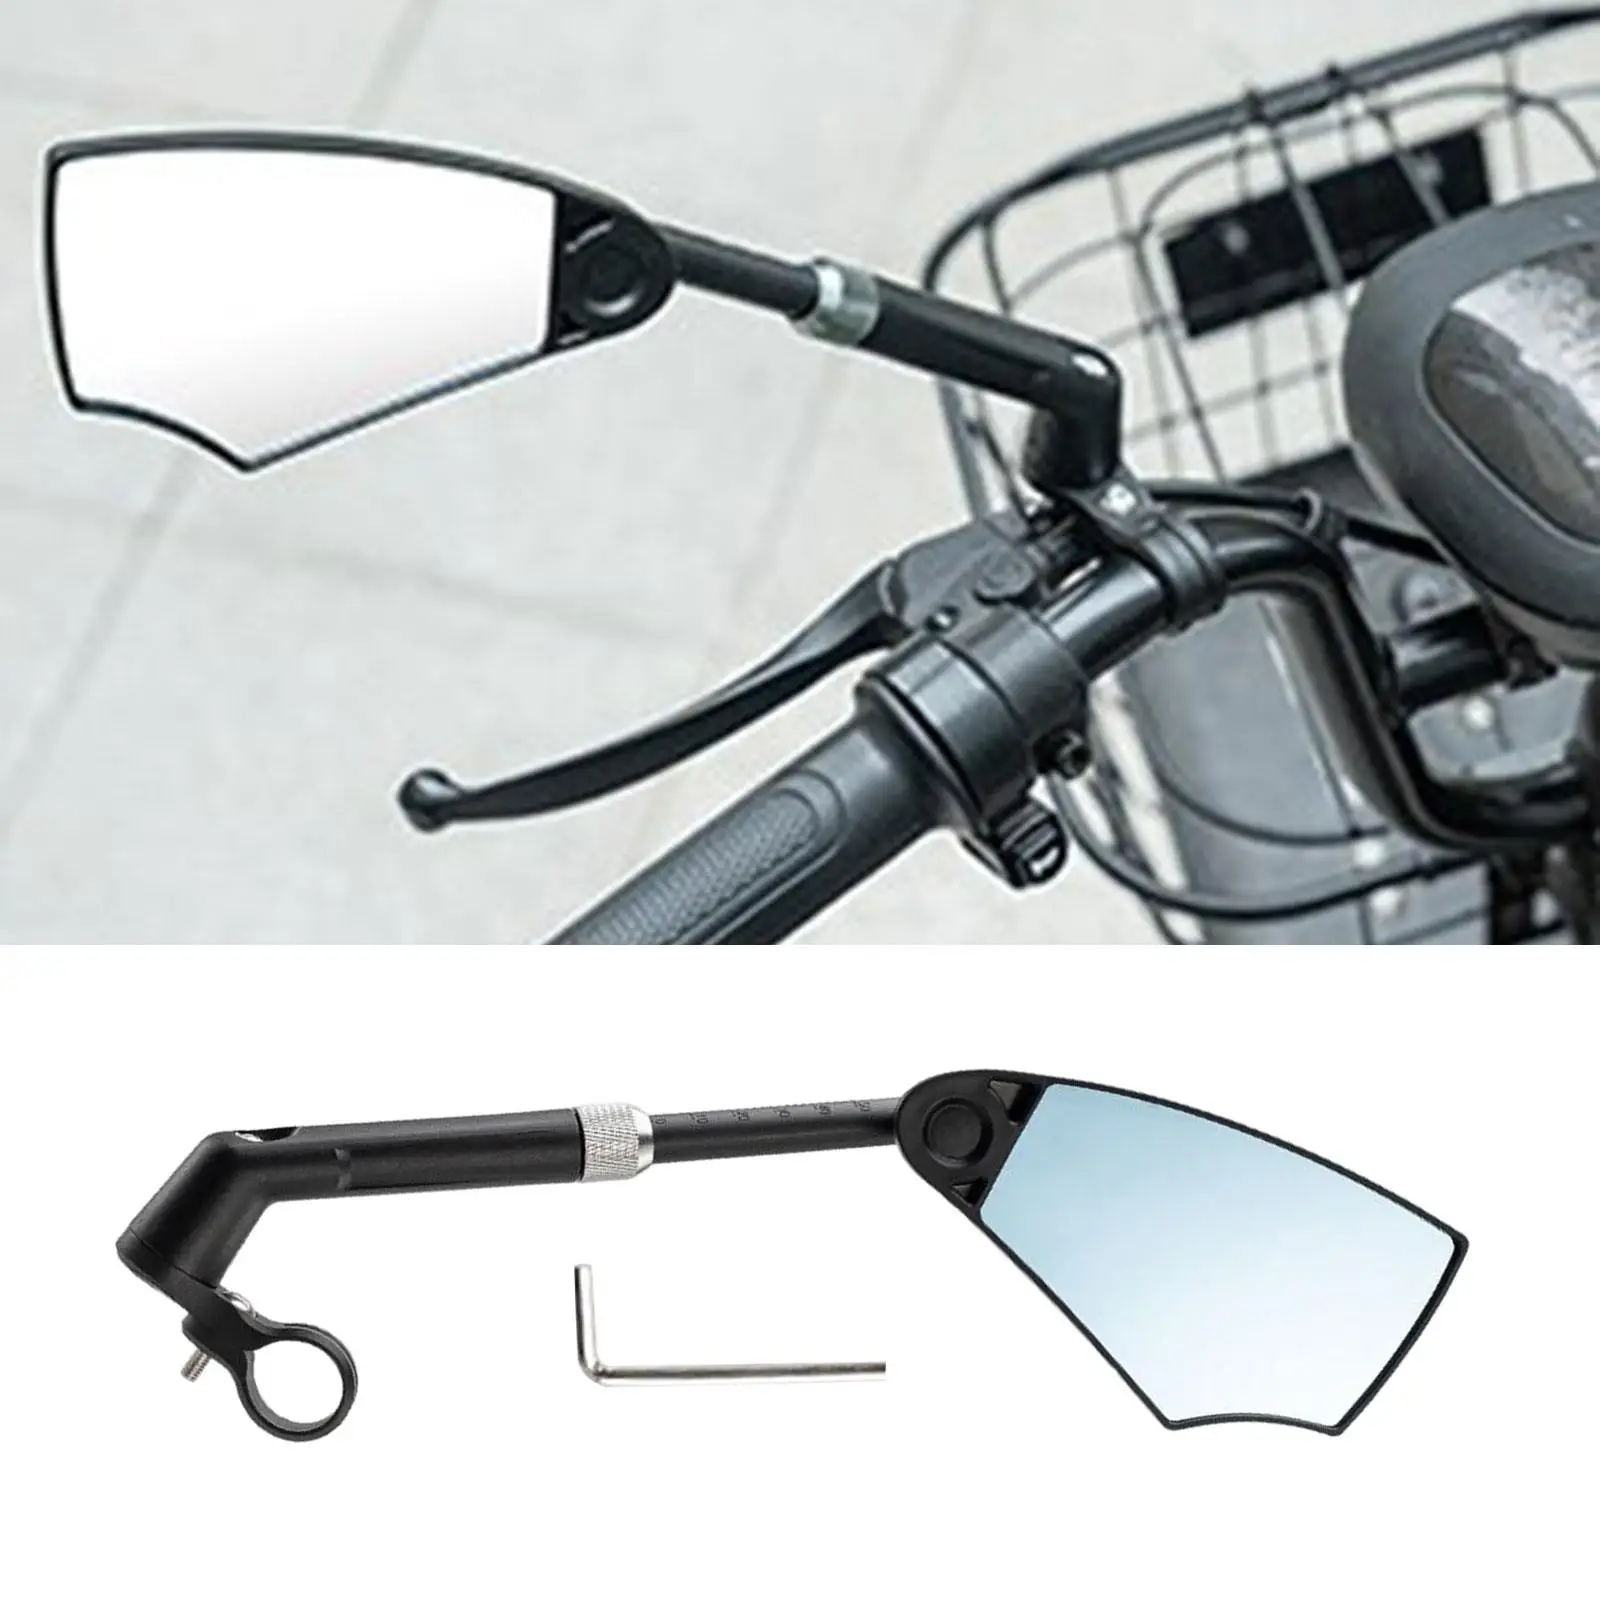 Bike Rear View Mirror Handlebar Accessories Adjustable Bike Mirror Bike Rear View Mirrors for Motorcycle Riding Electric Bike